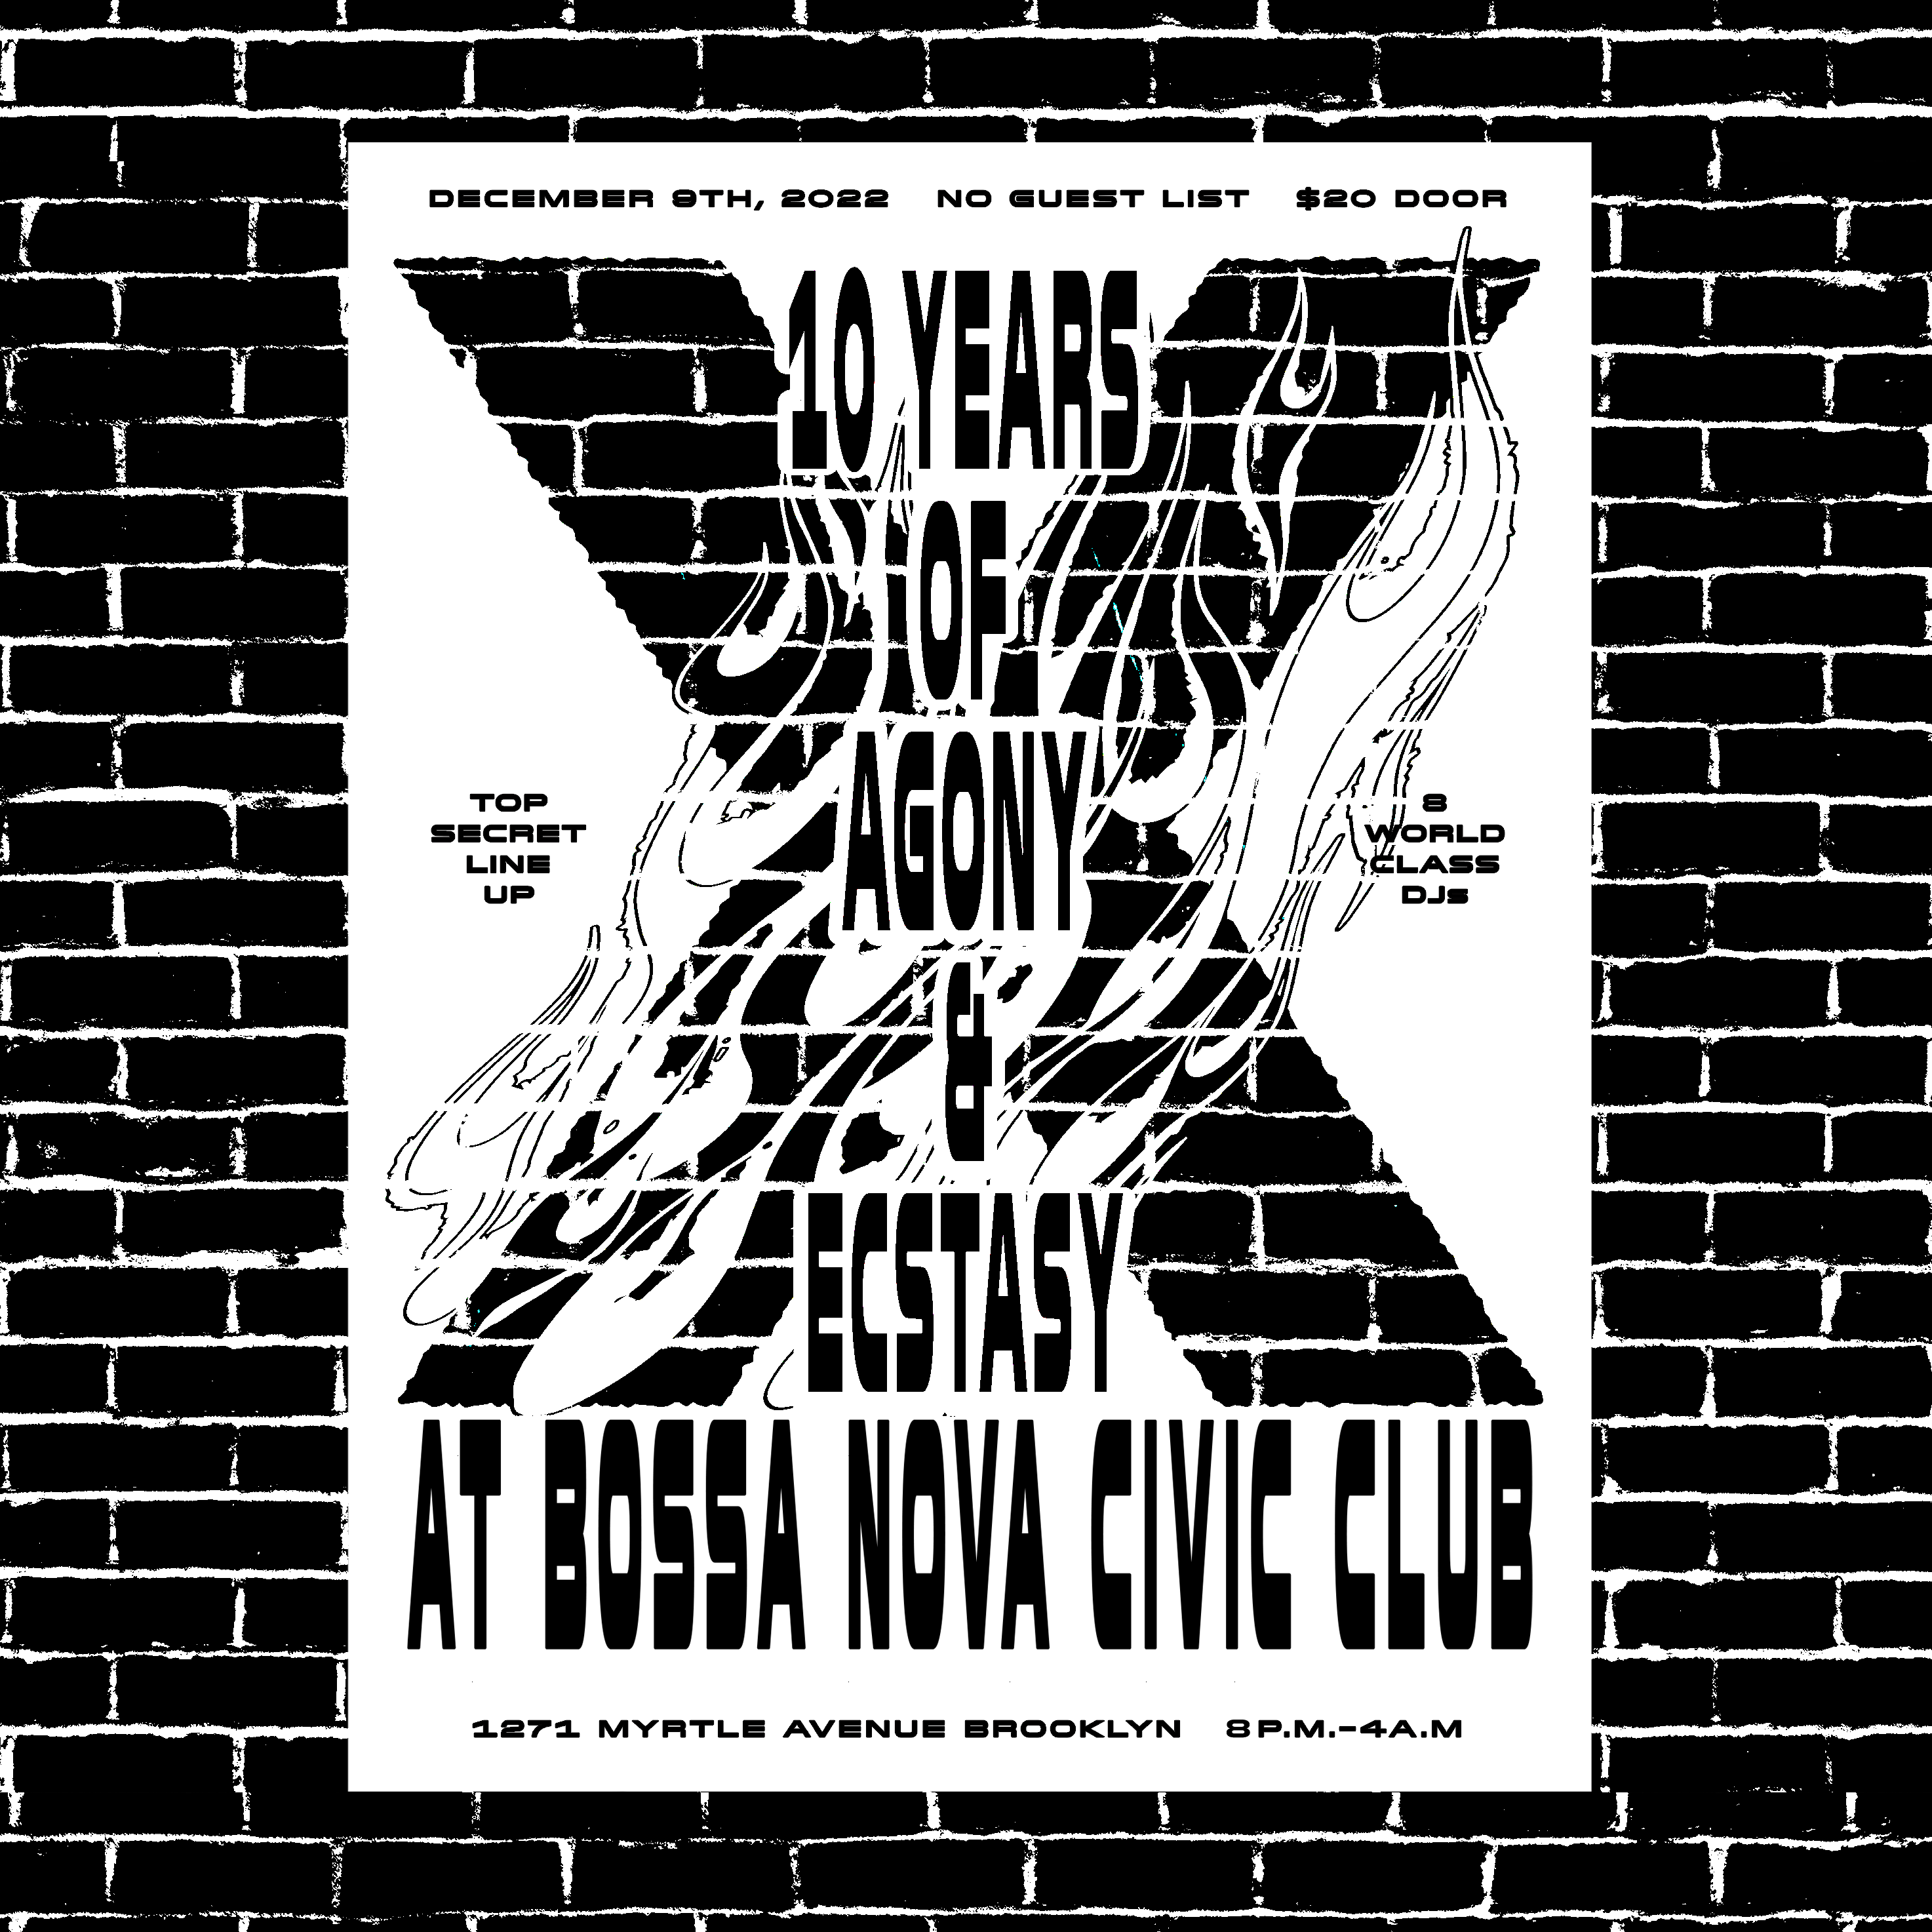 Bossa Nova Civic Club FAQ, Details & Upcoming Events - Brooklyn